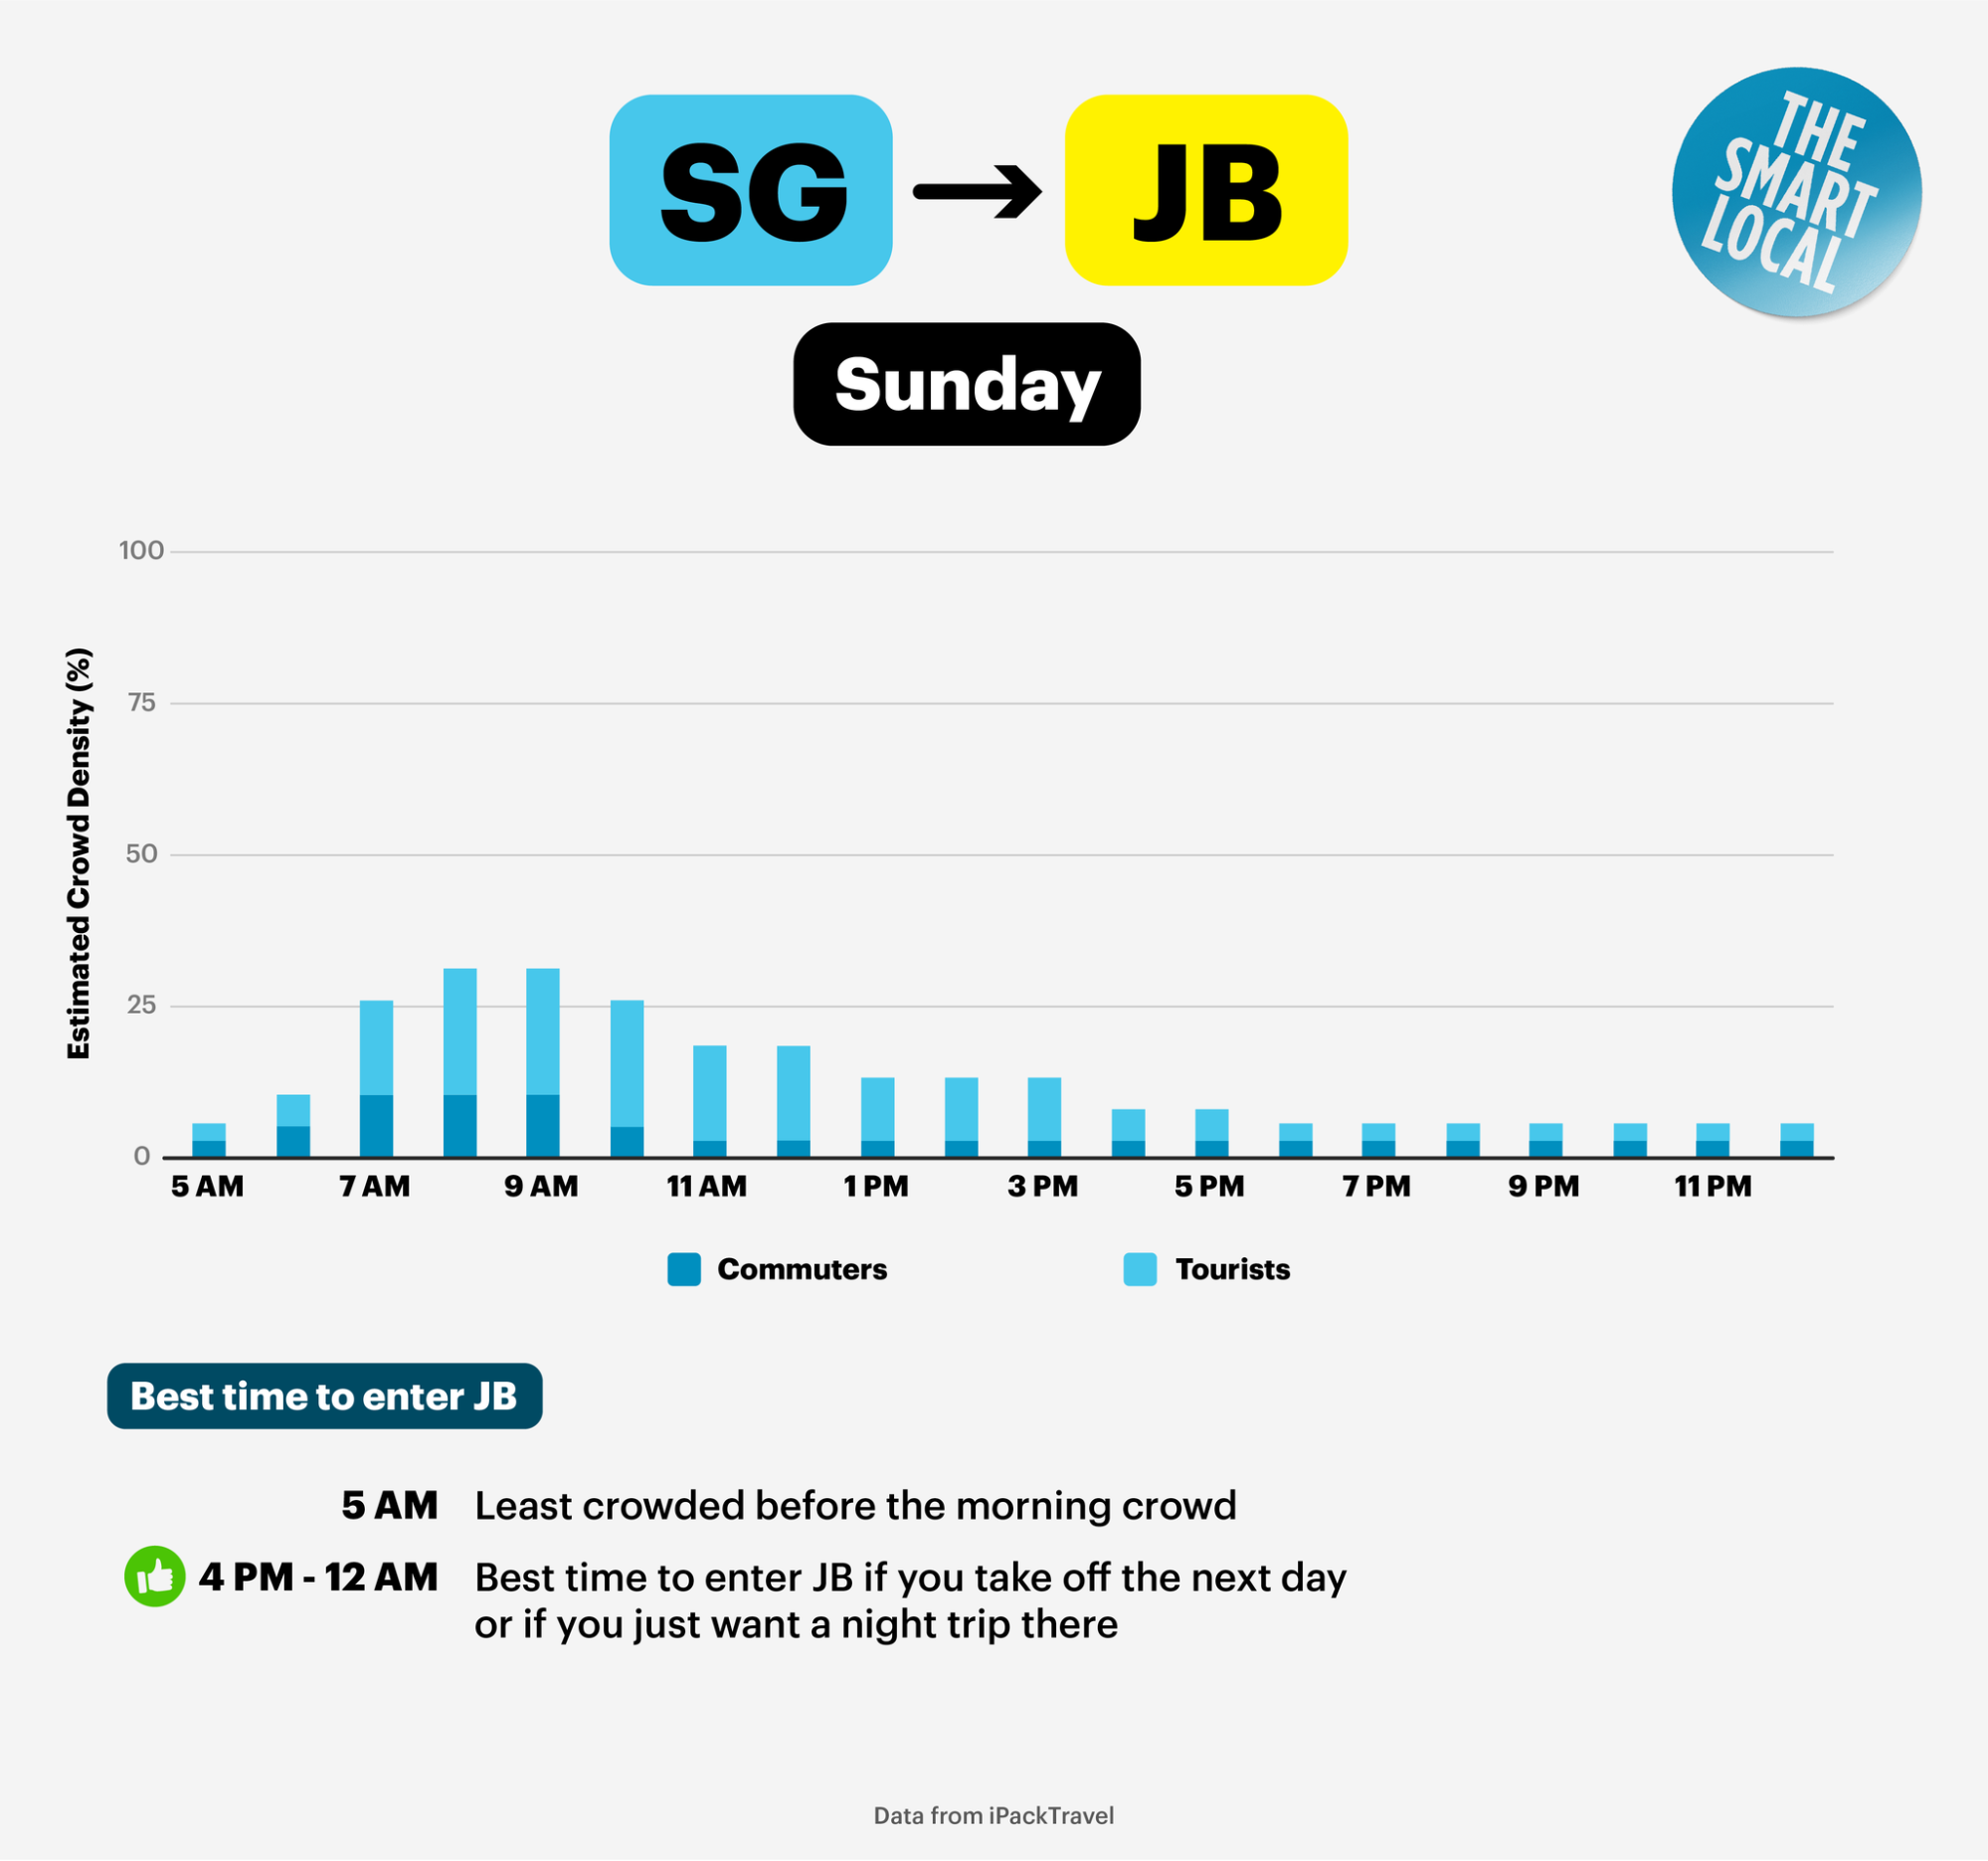 SG to JB traffic on Sundays